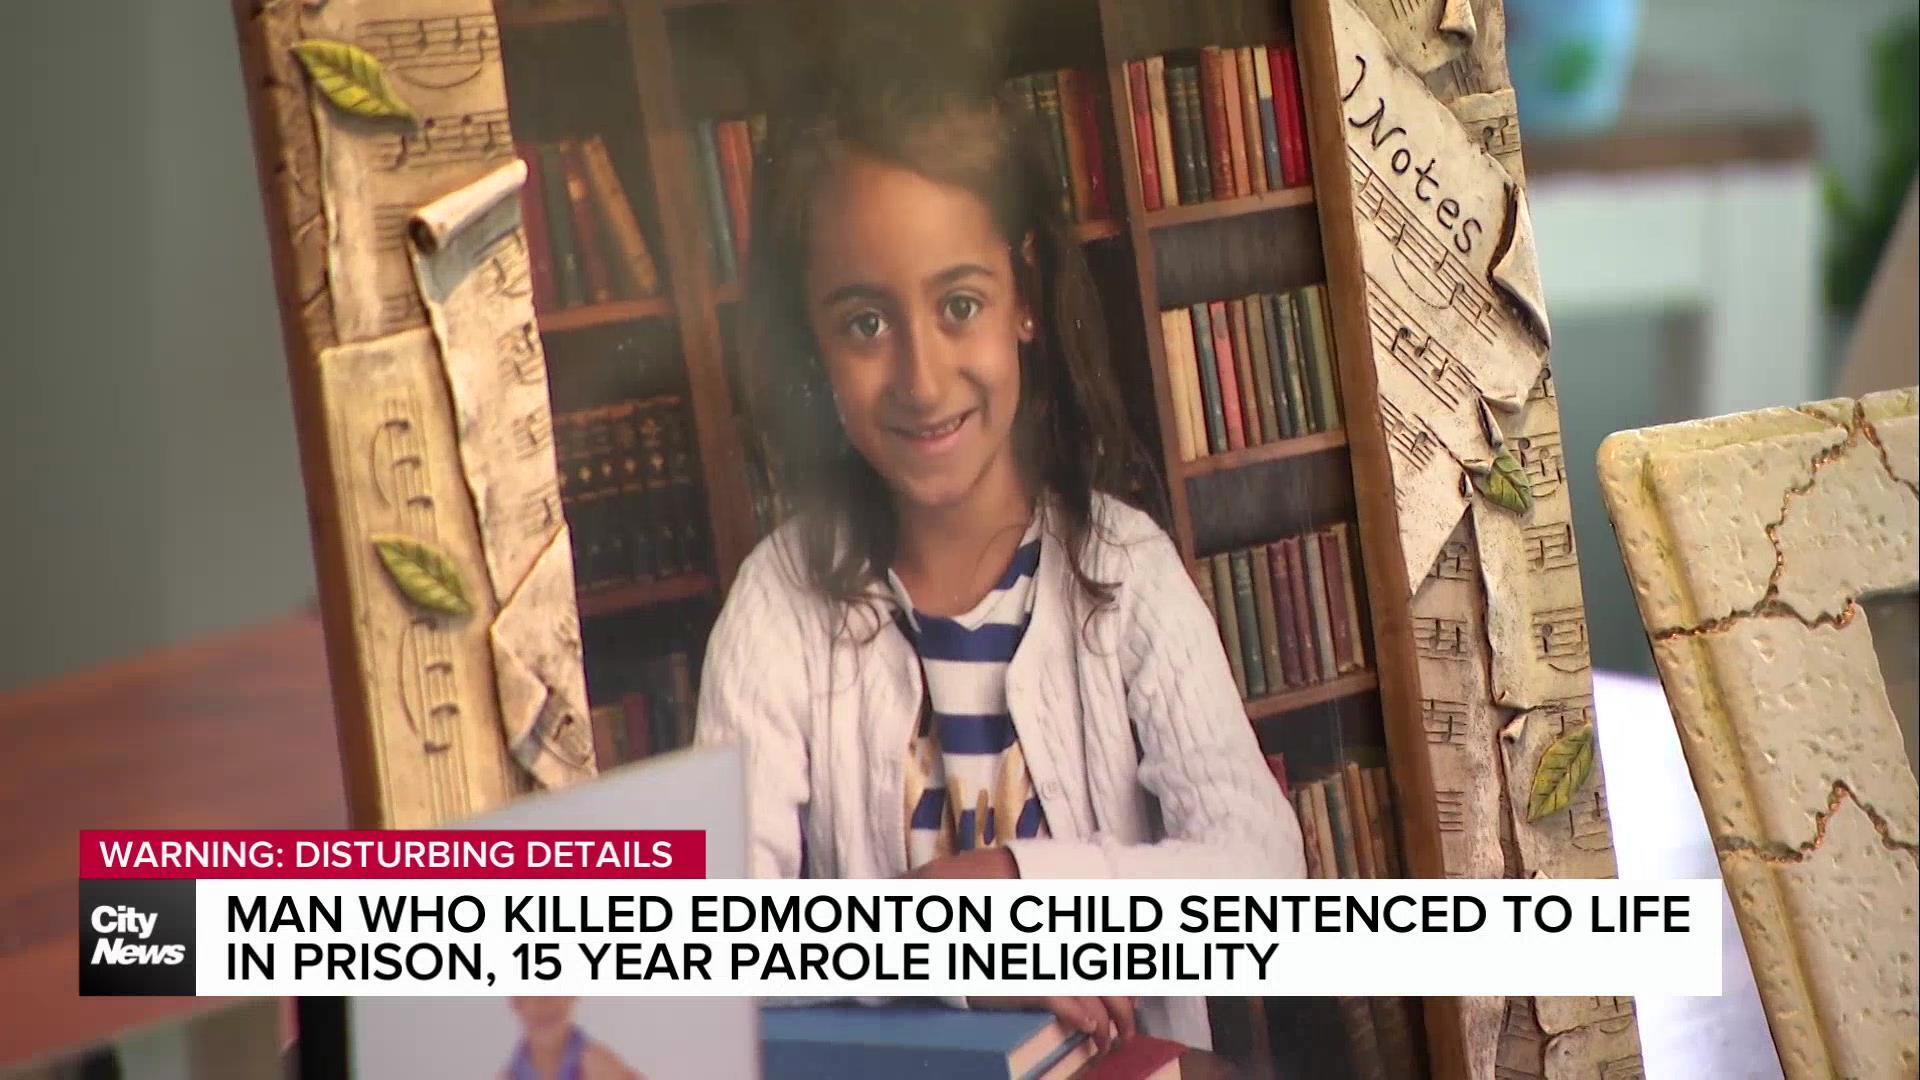 Man who killed Edmonton child gets life sentence, no parole for 15 years